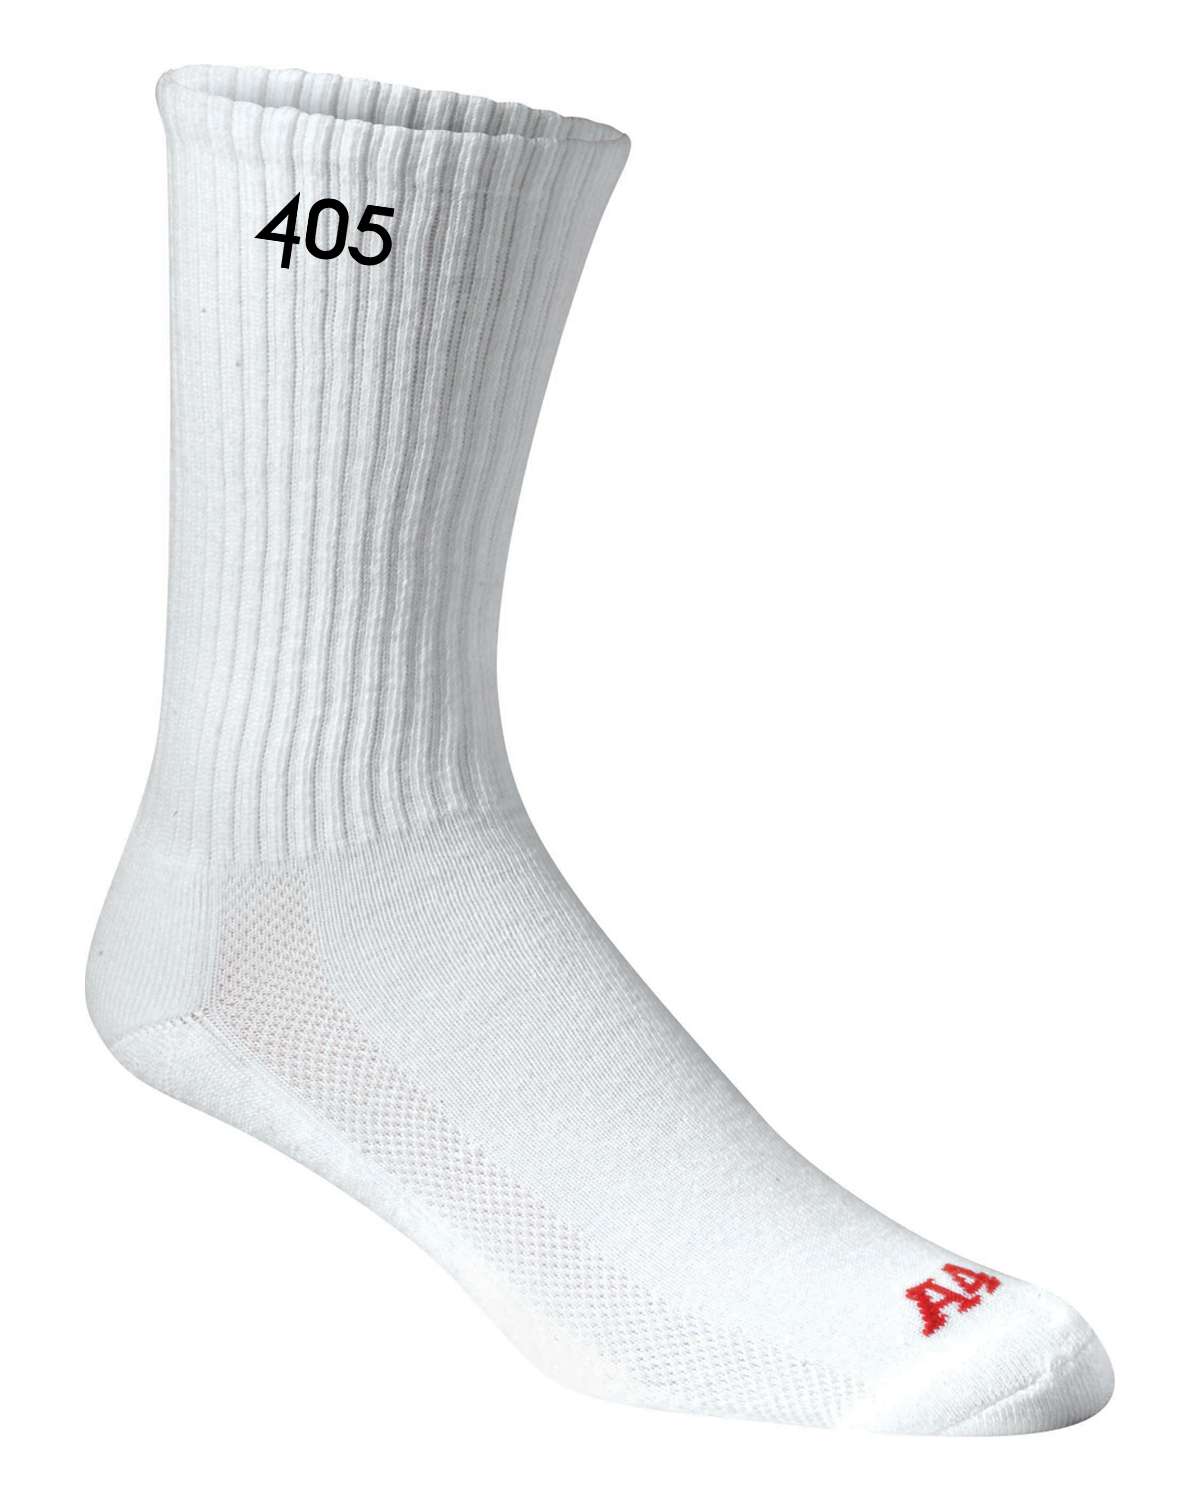 A4 S8004 - Performance Crew Socks